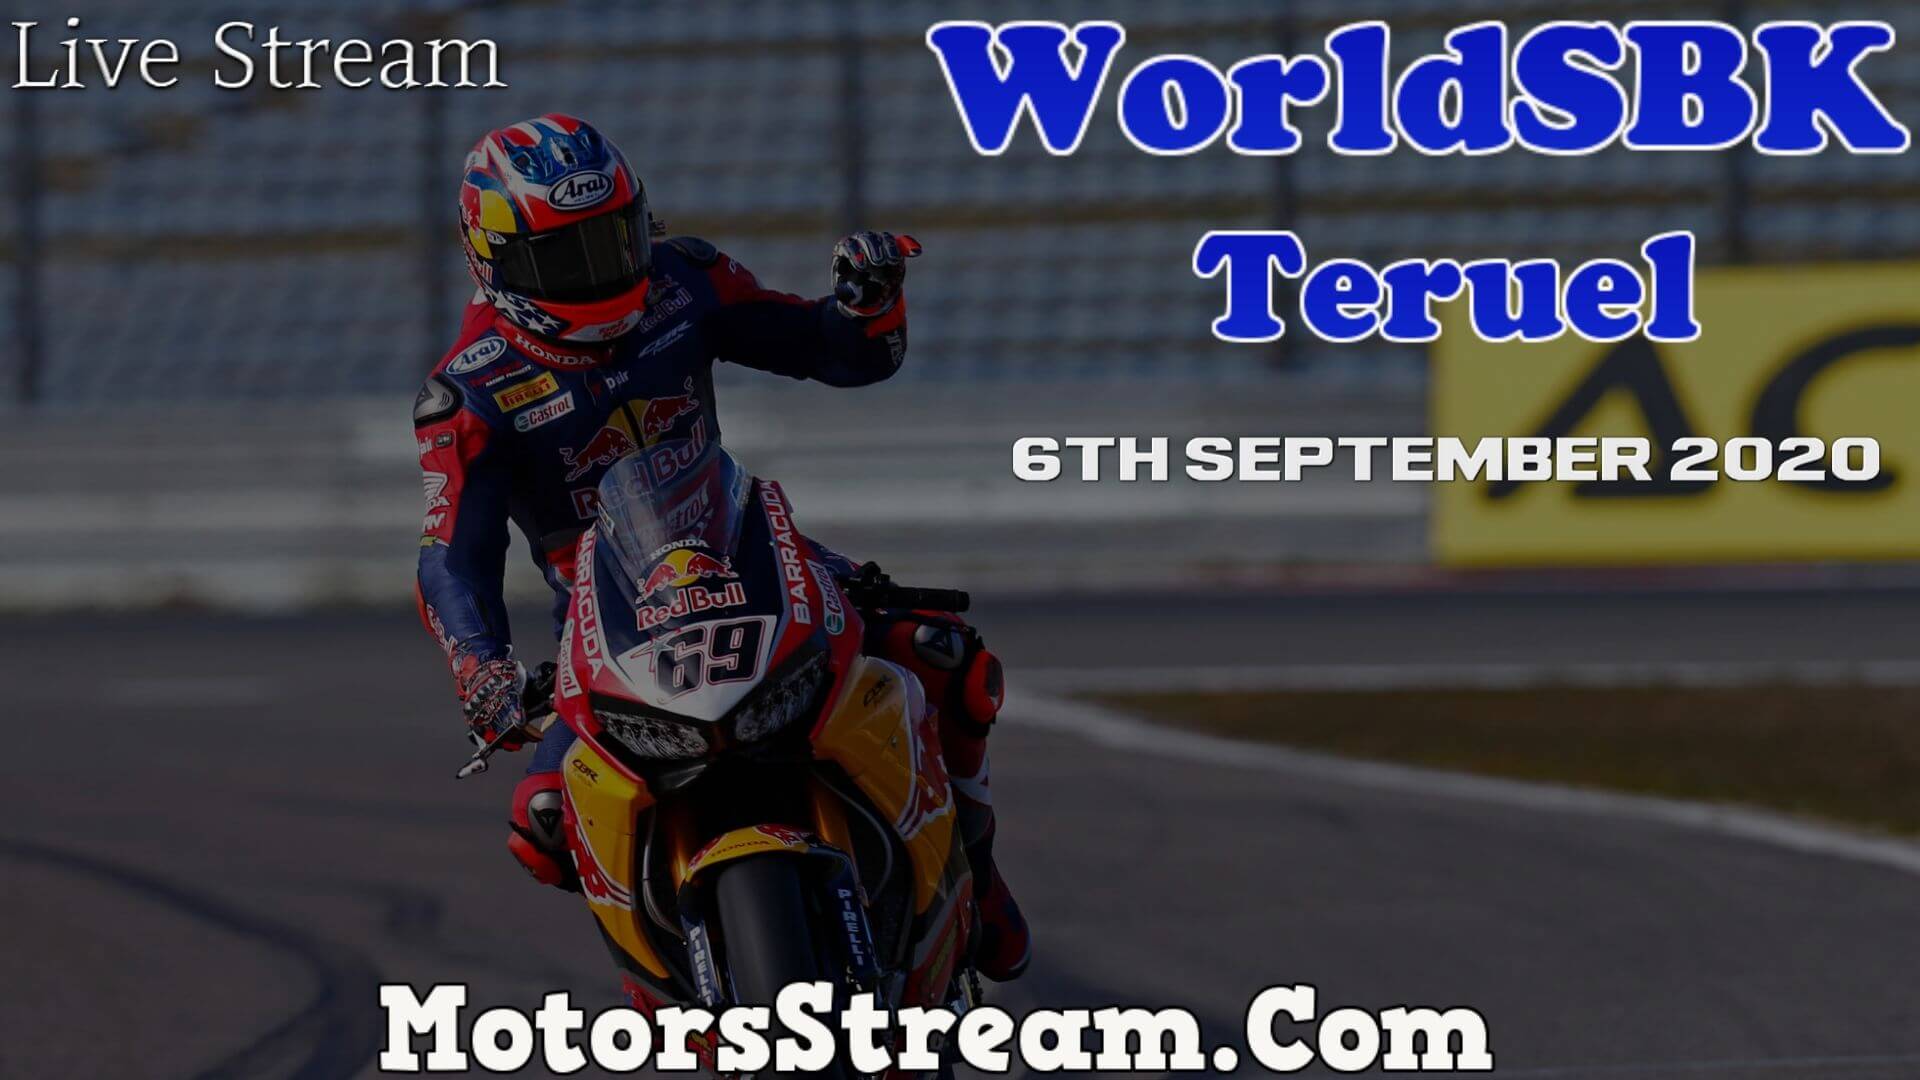 World Superbike Round 5 Live Stream